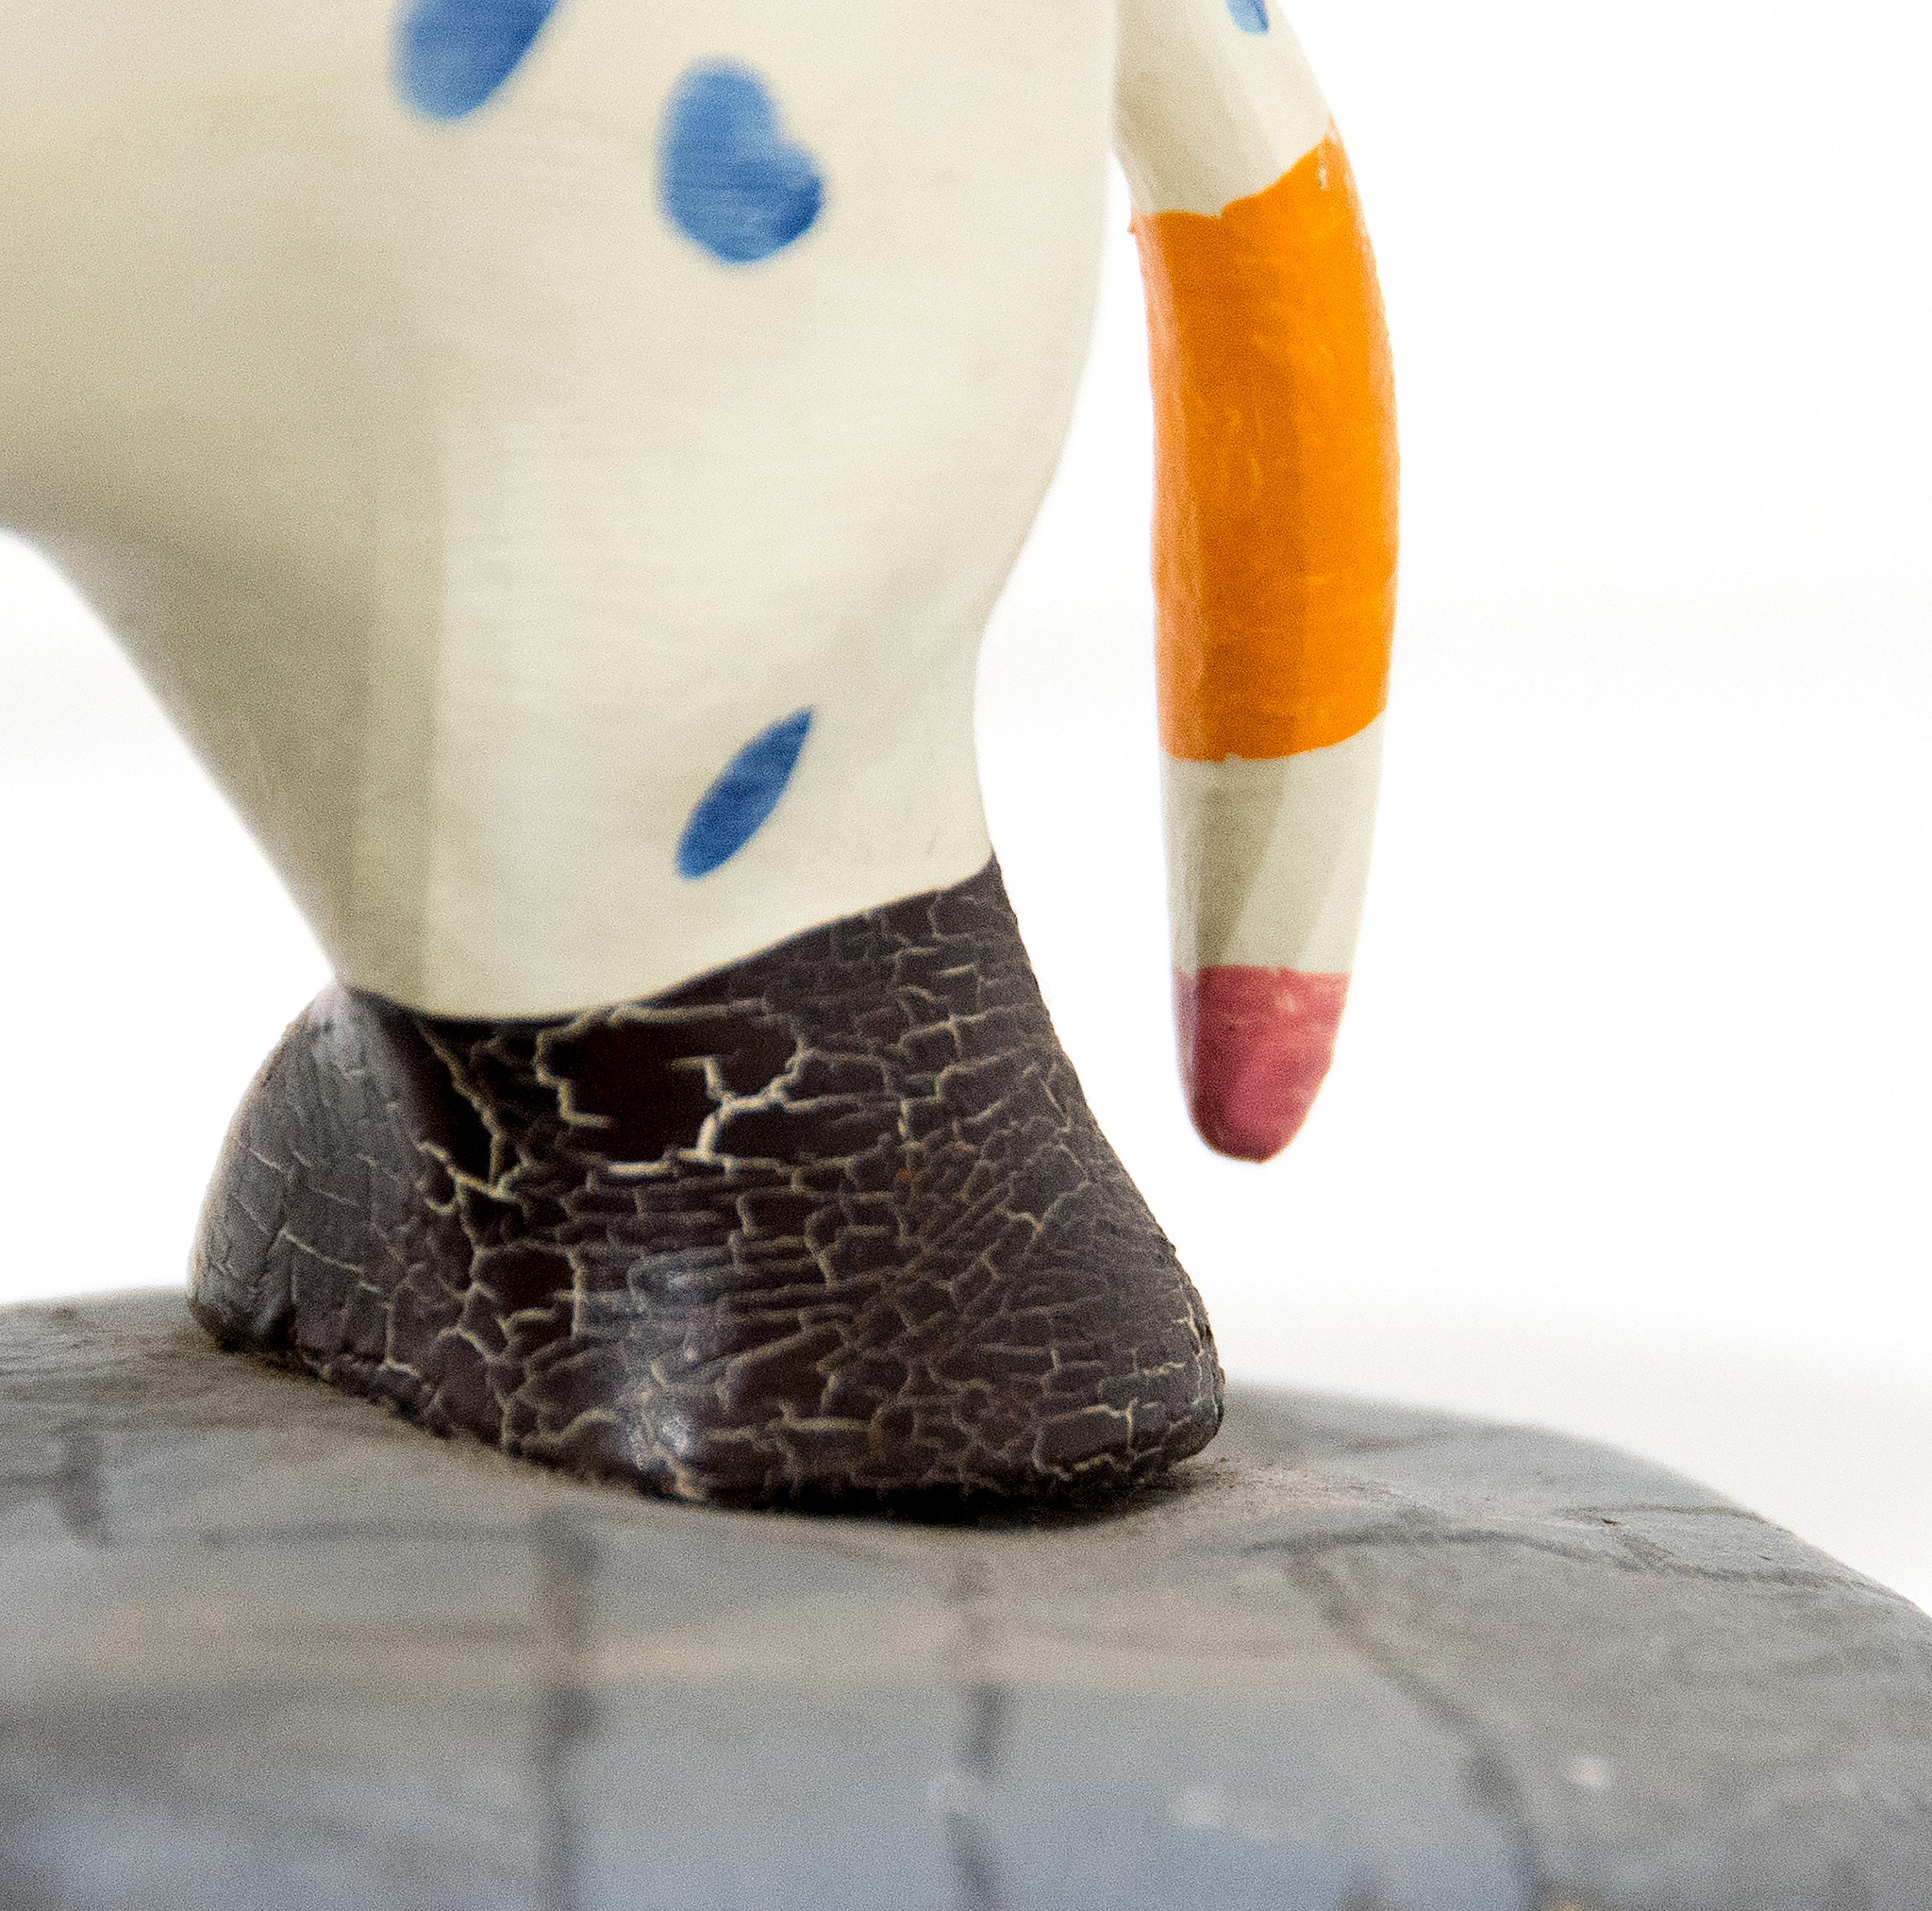 Crying Dog - Contemporary Sculpture by Niki de Saint Phalle